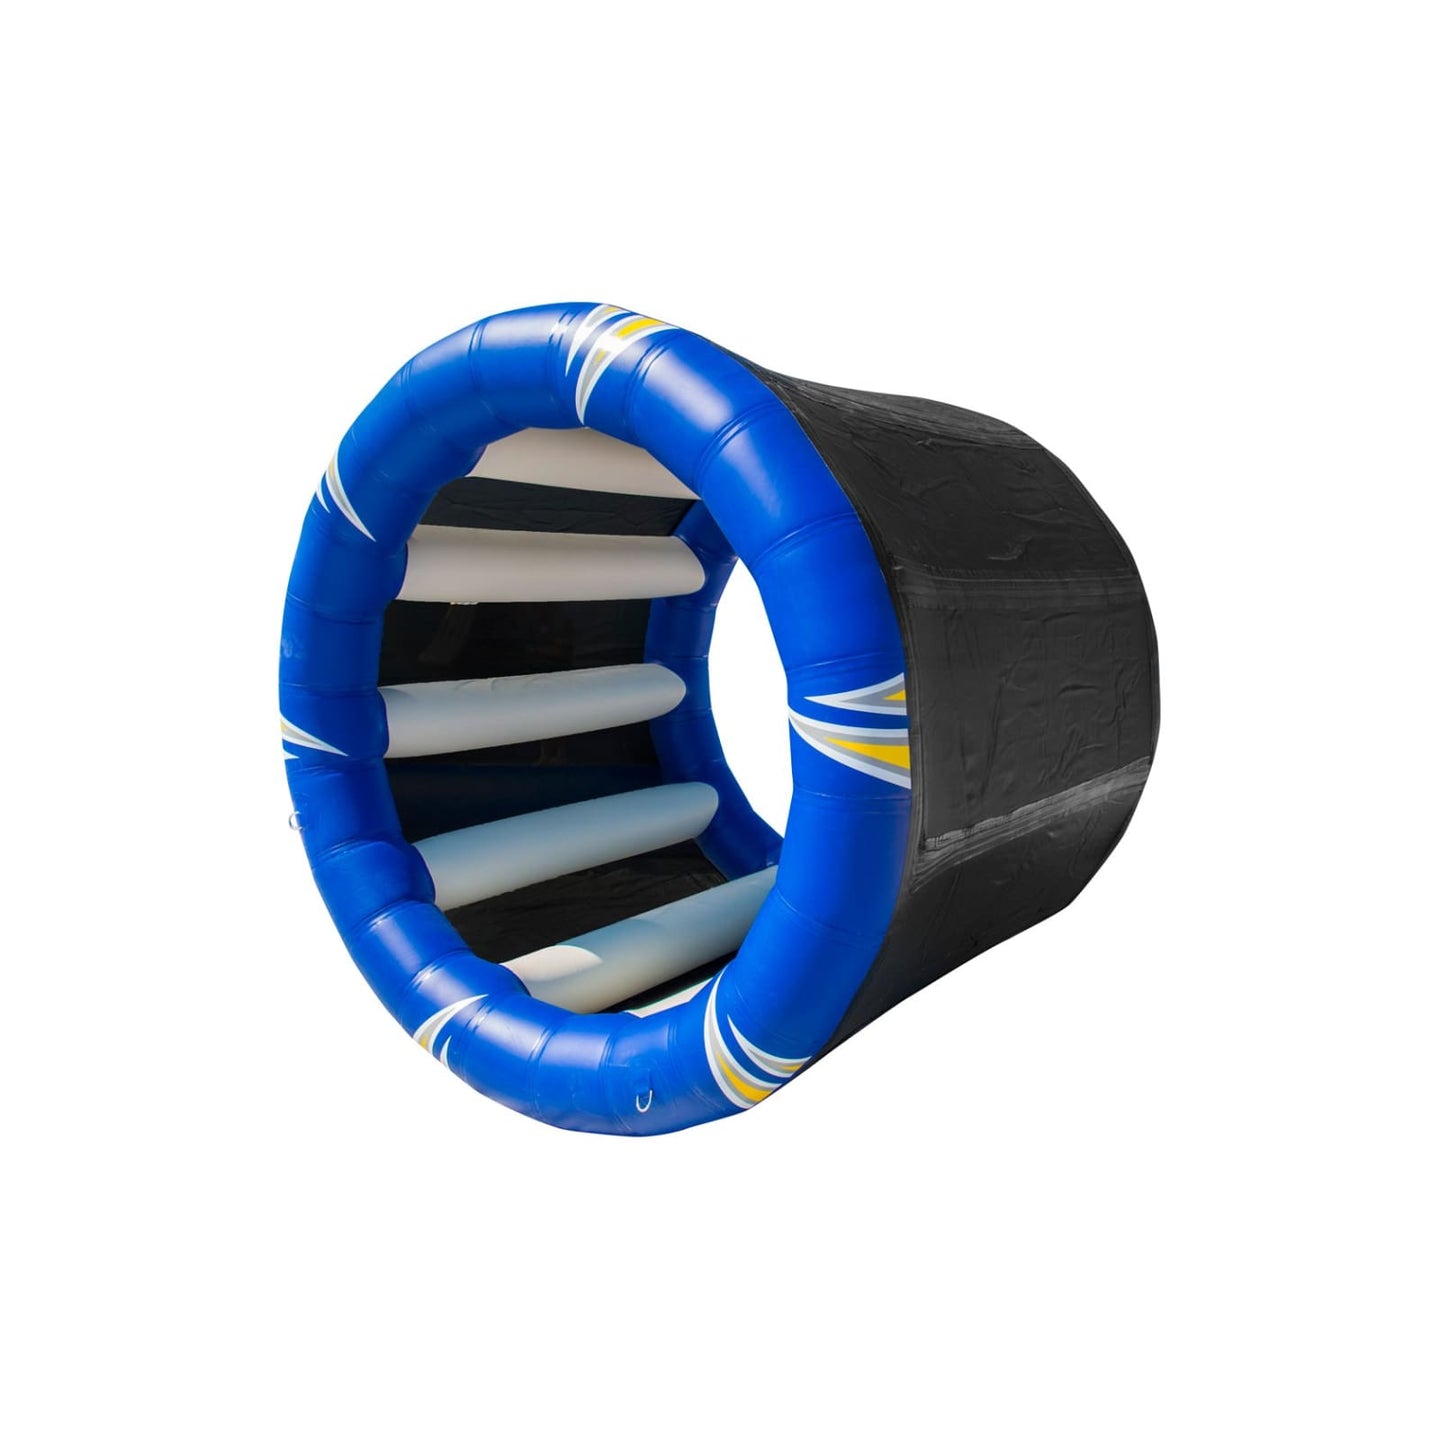 Aquaglide Cyclone Wheel (w/ D-Ring) - 585219631 - Water Toys